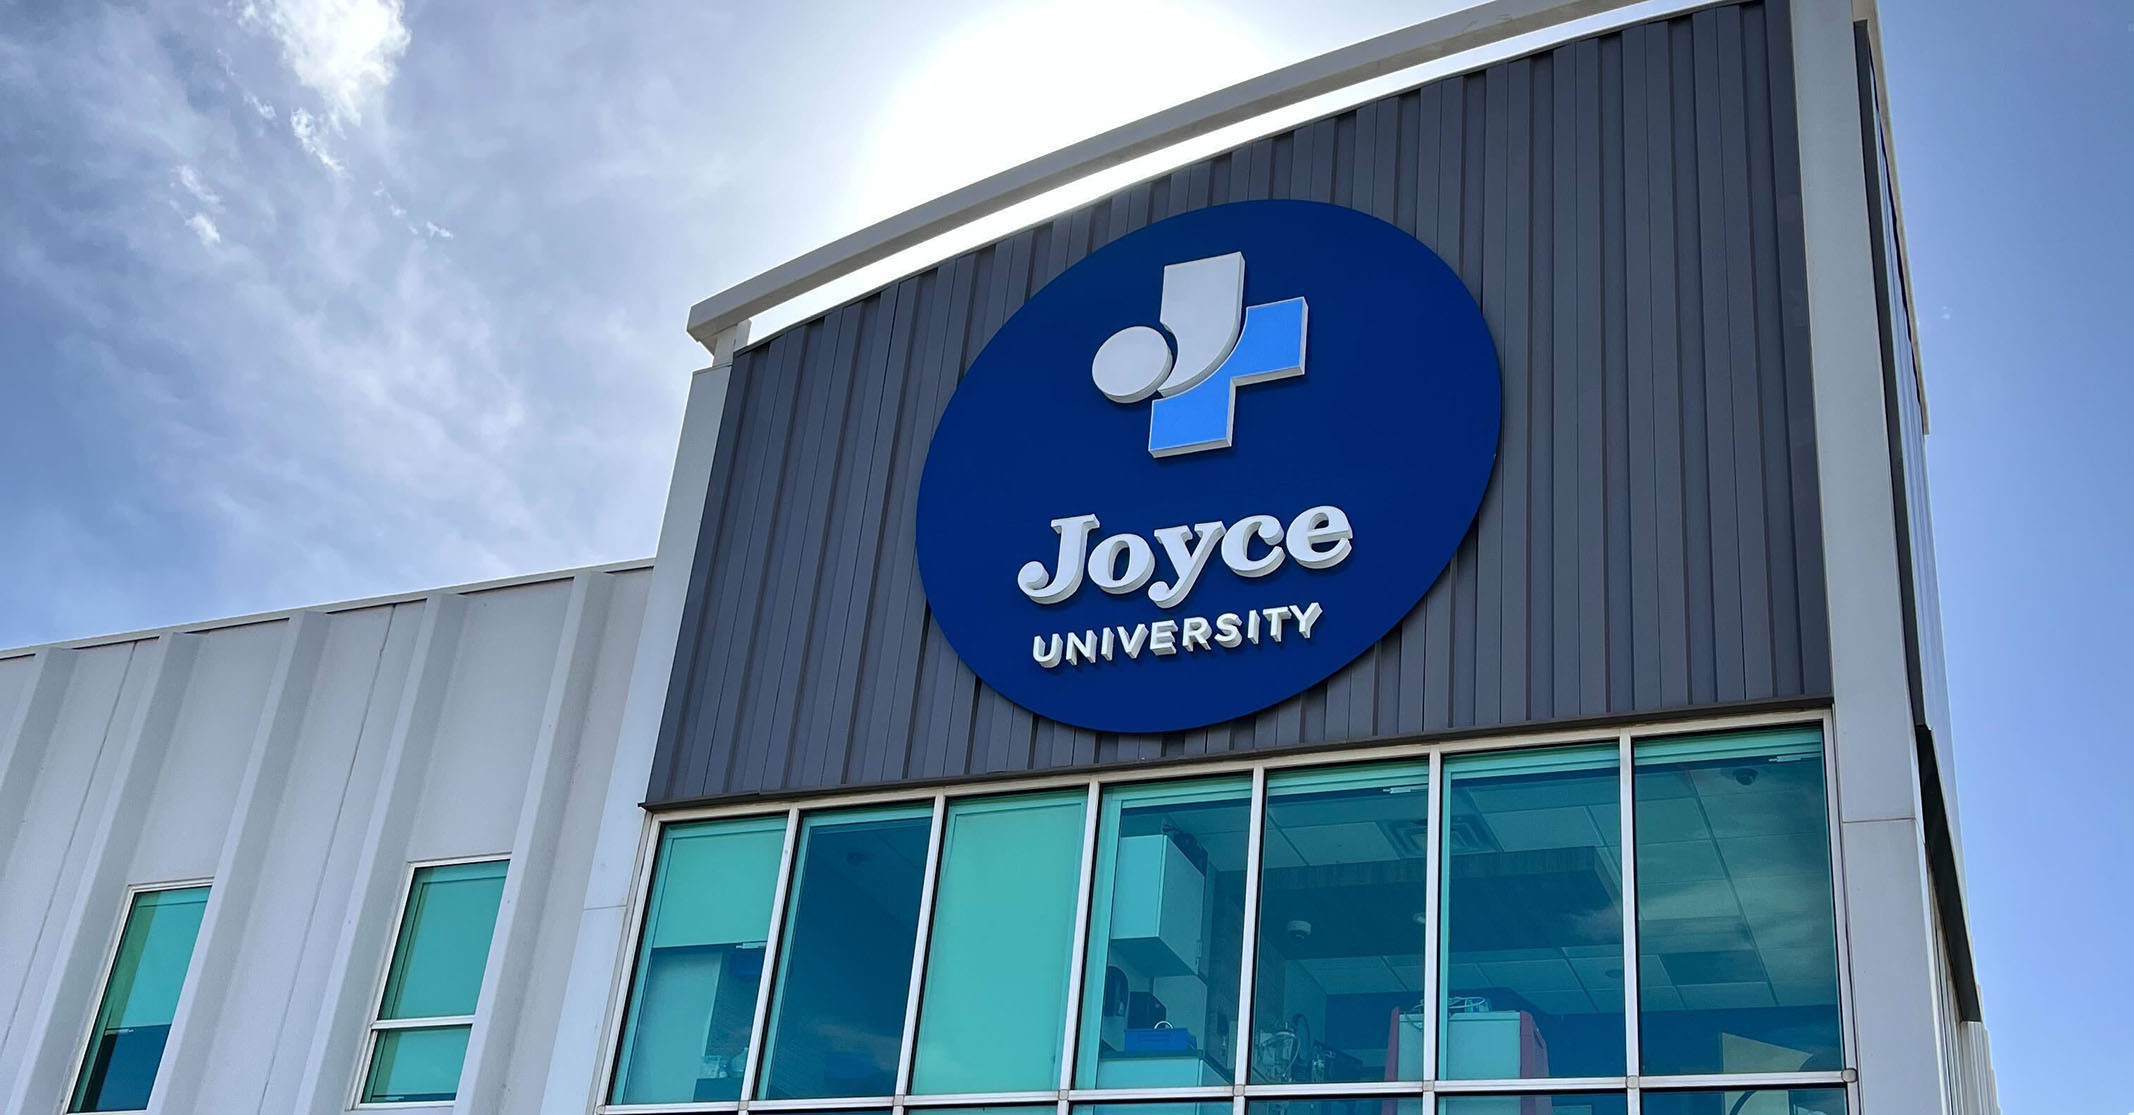 Joyce University 医疗健康护理医学院科技大学logo设计